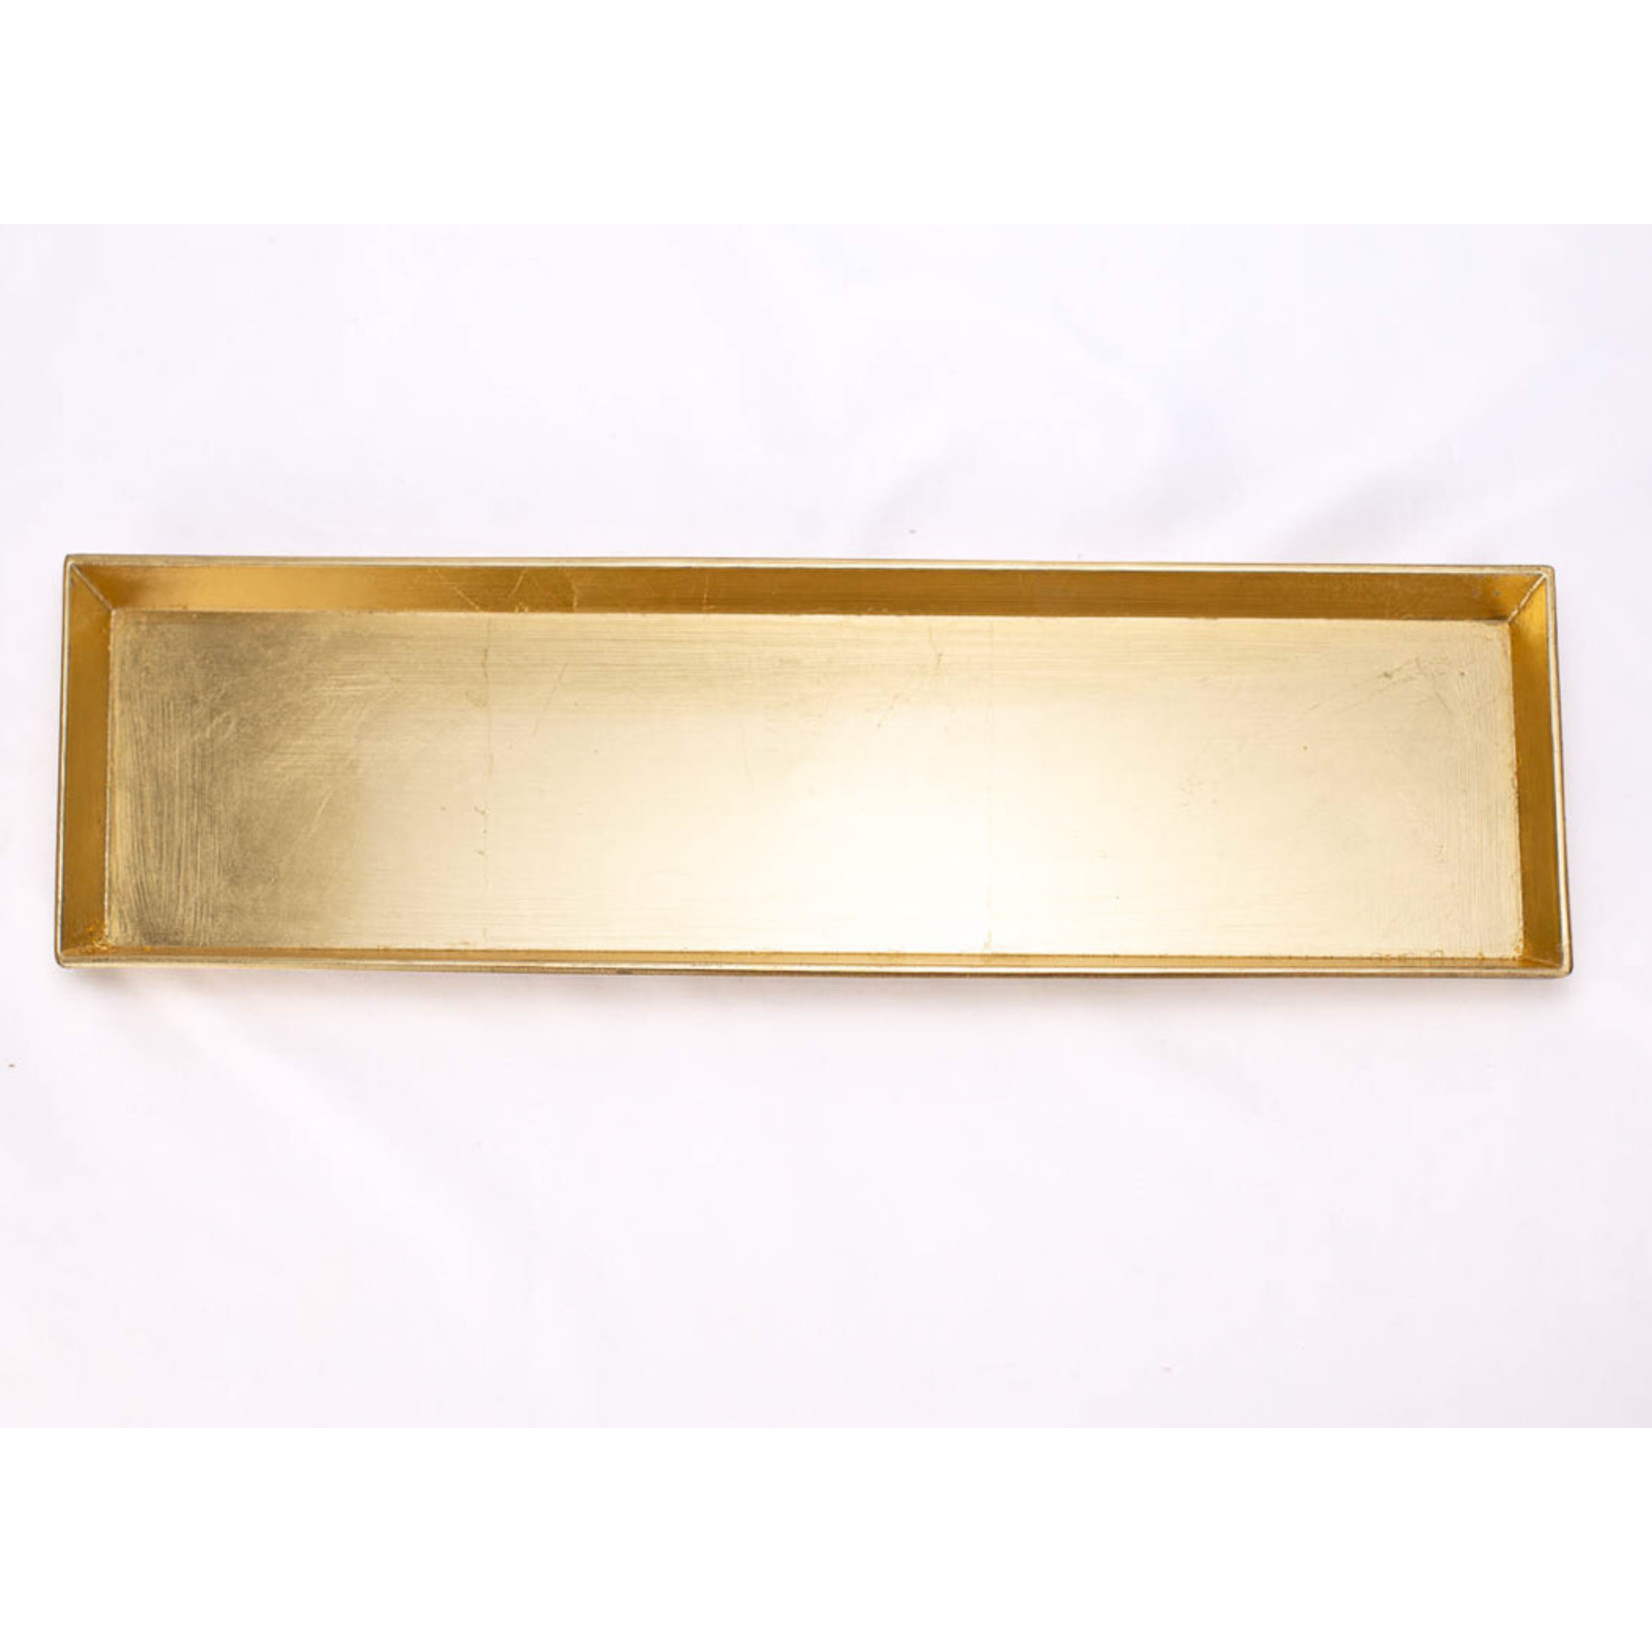 The Royal Standard Gold Rhodes Tray - 17 x 5 x 0.75